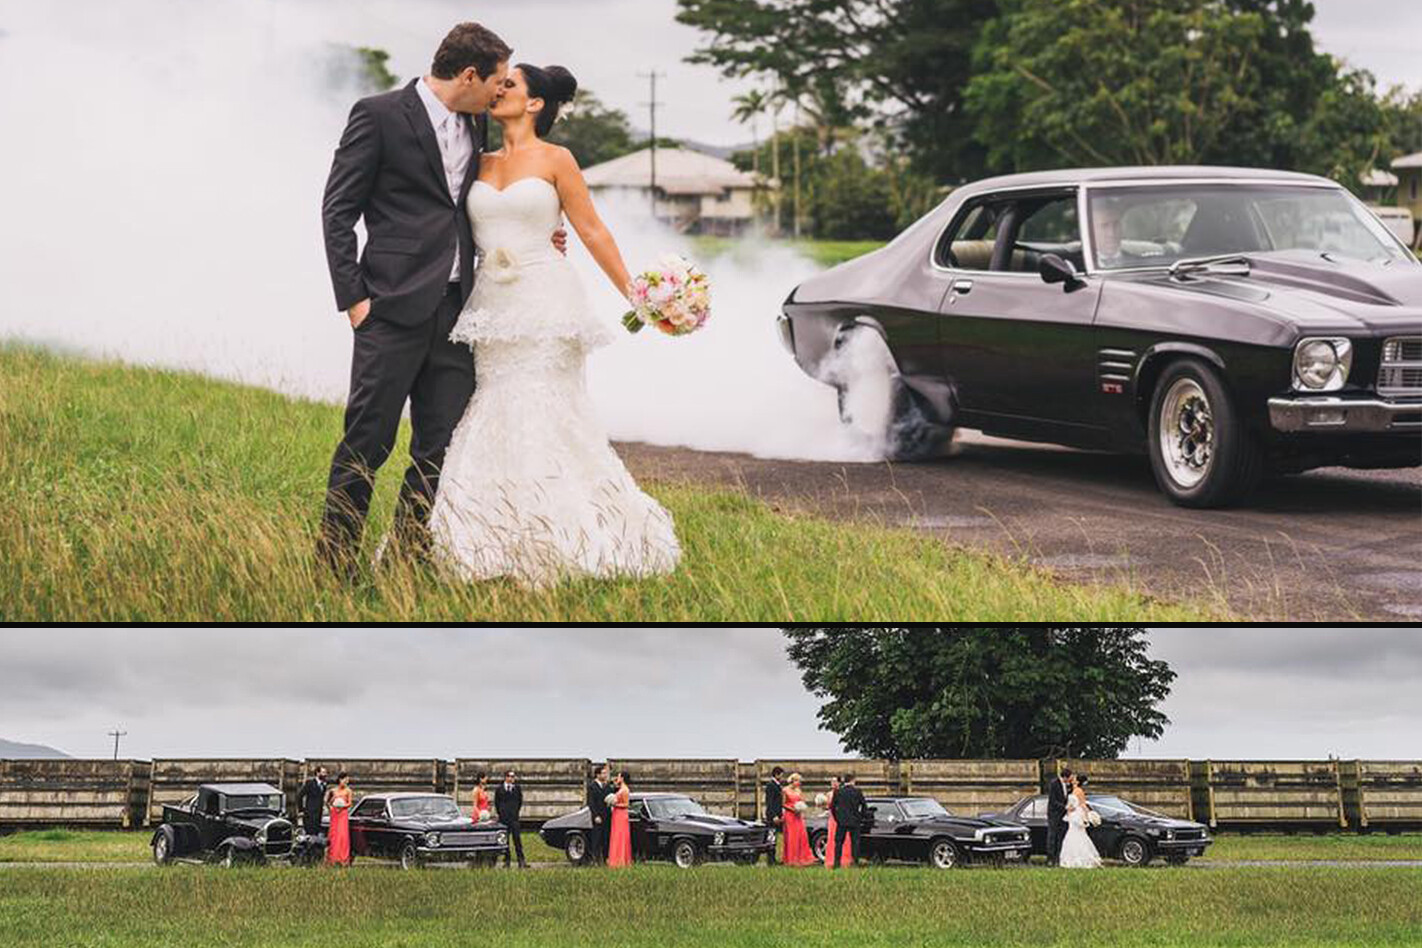 Brad Hanrahan's wedding cars